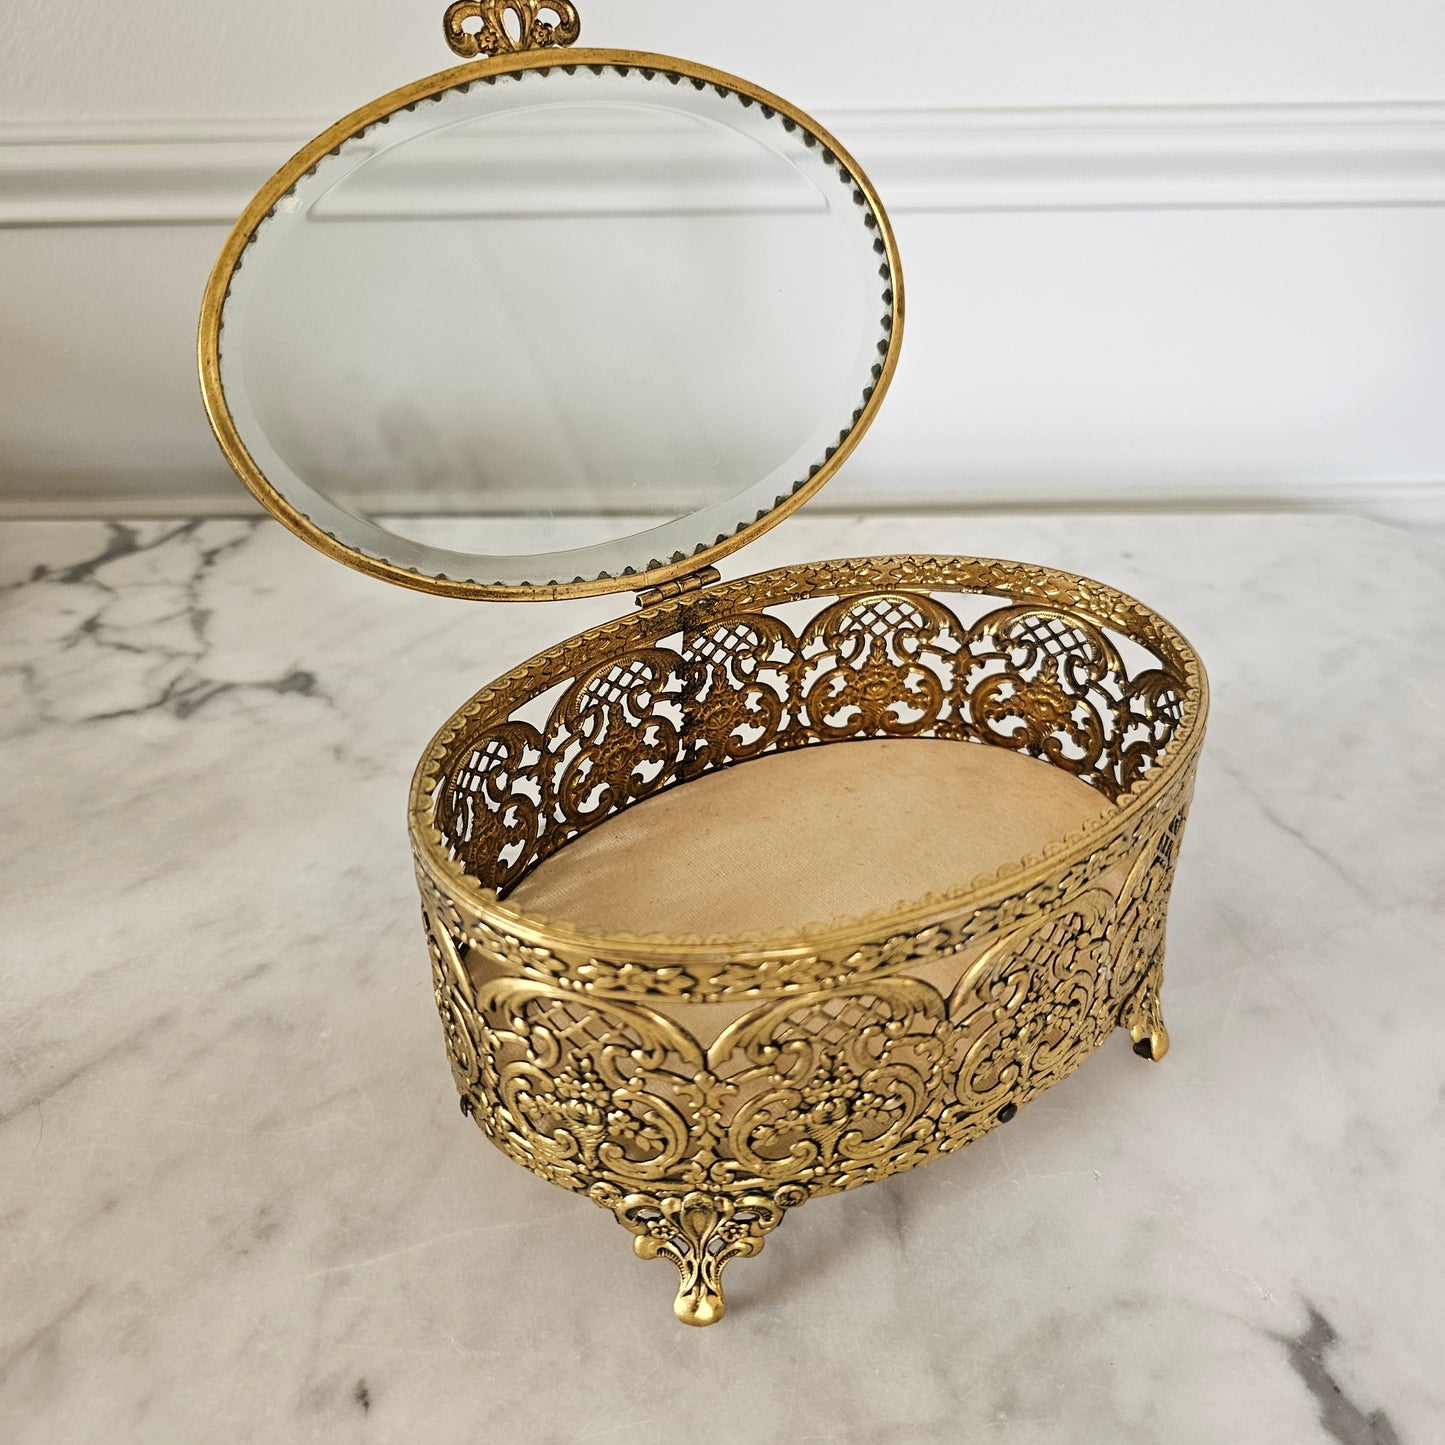 Vintage Oval Filigree Jewelry Casket Box